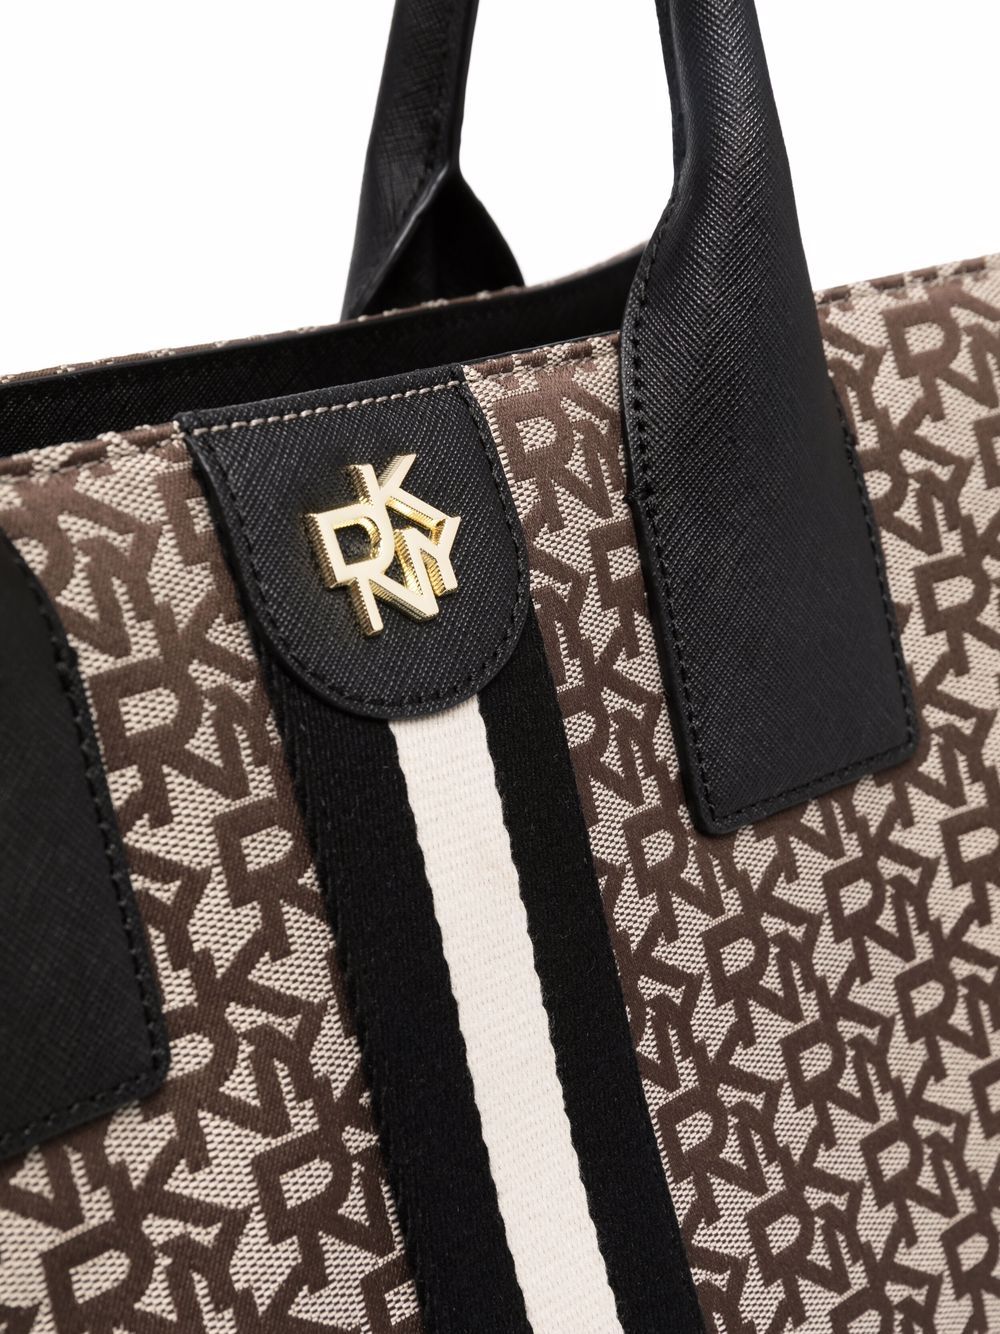 DKNY shopper bag Carol Tote Bgd - Blk / Gold, Buy bags, purses &  accessories online